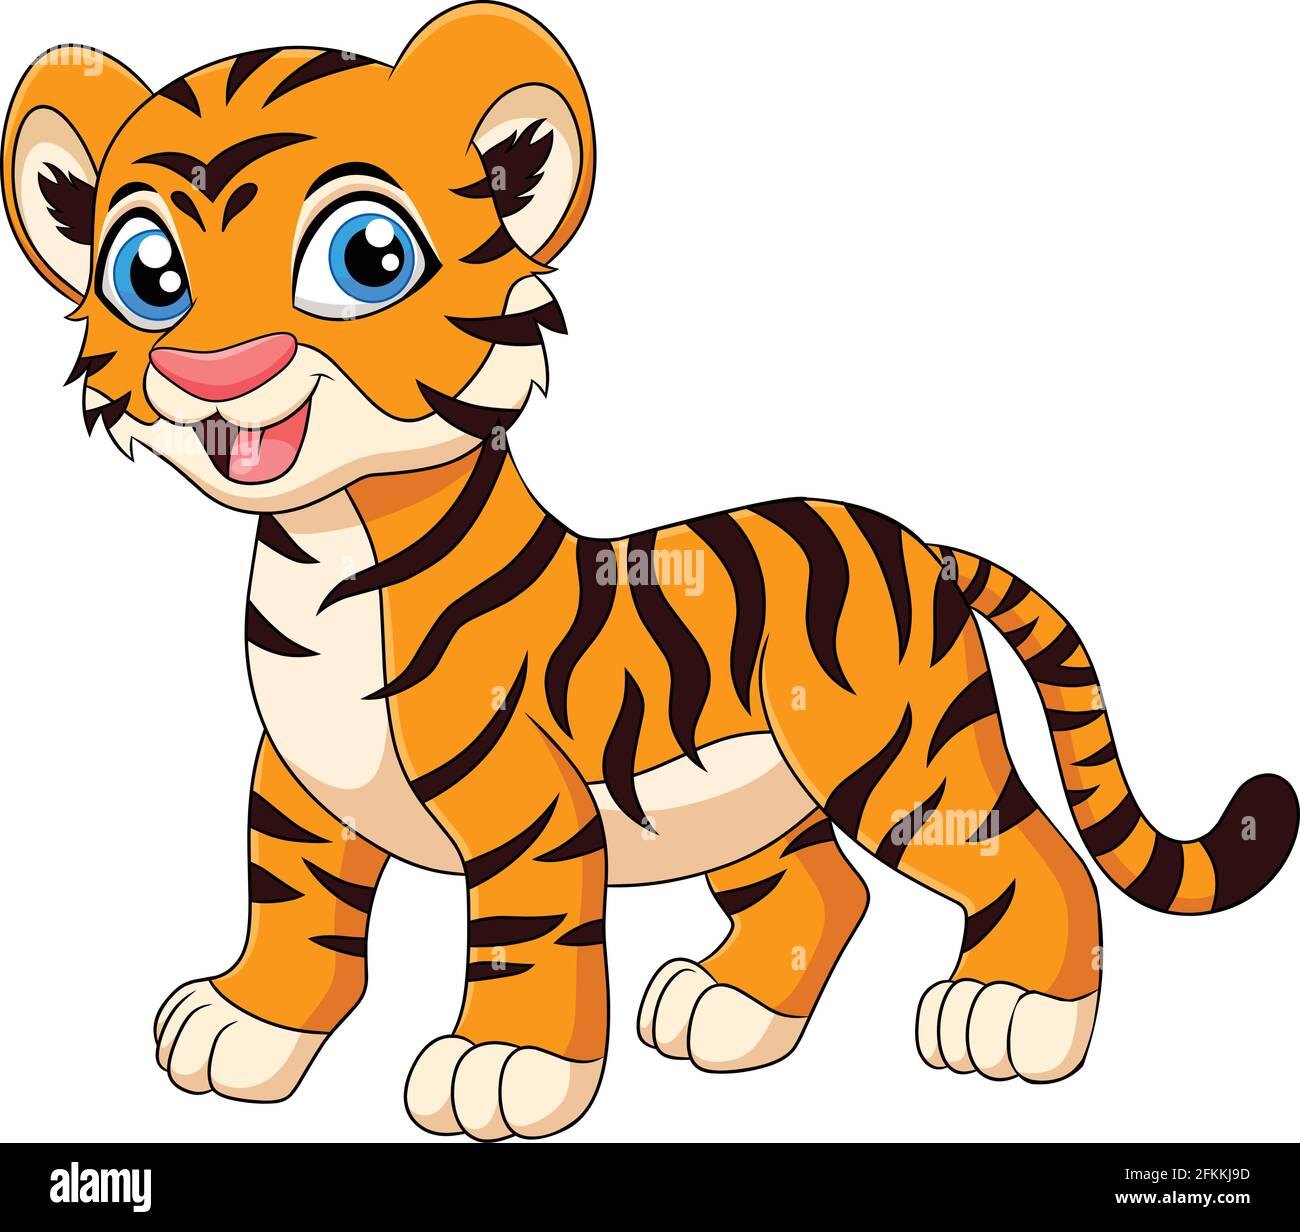 Tigre de dibujos animados fotografías e imágenes de alta resolución - Alamy